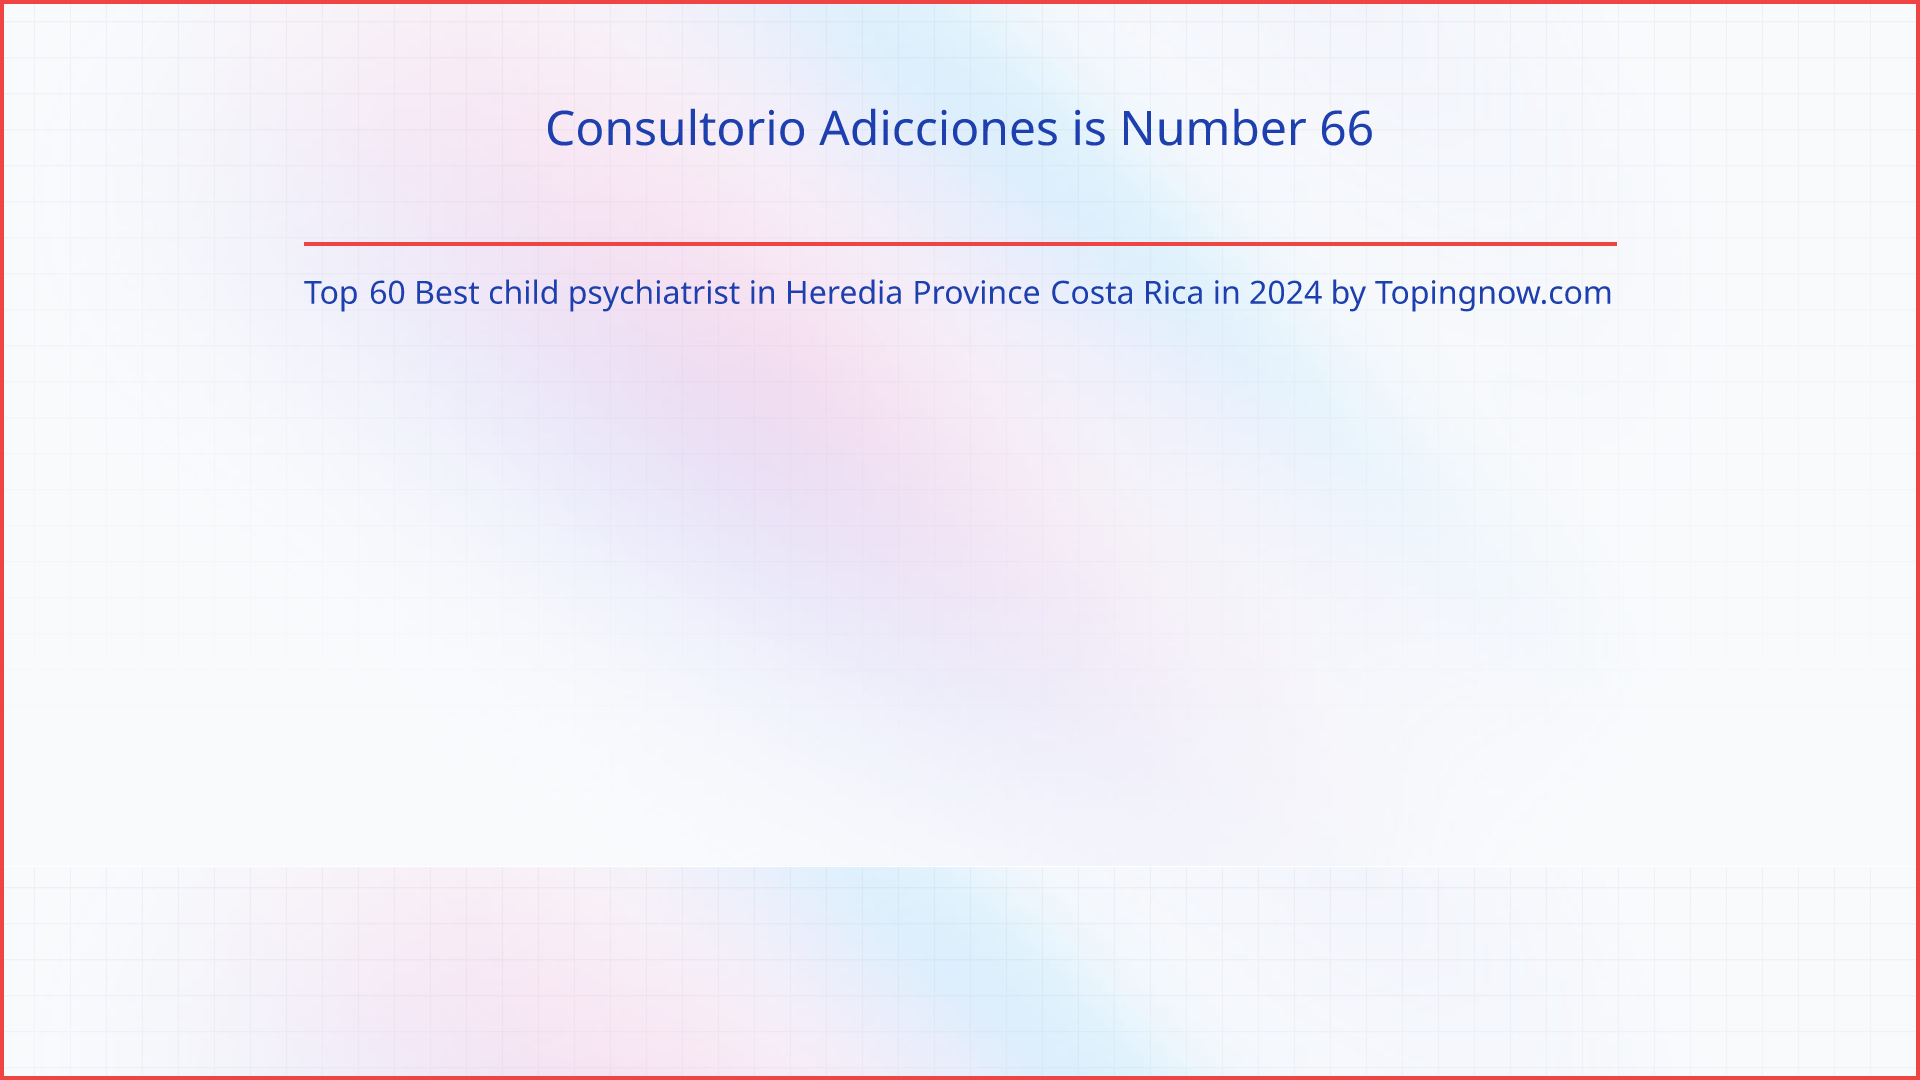 Consultorio Adicciones: Top 60 Best child psychiatrist in Heredia Province Costa Rica in 2024